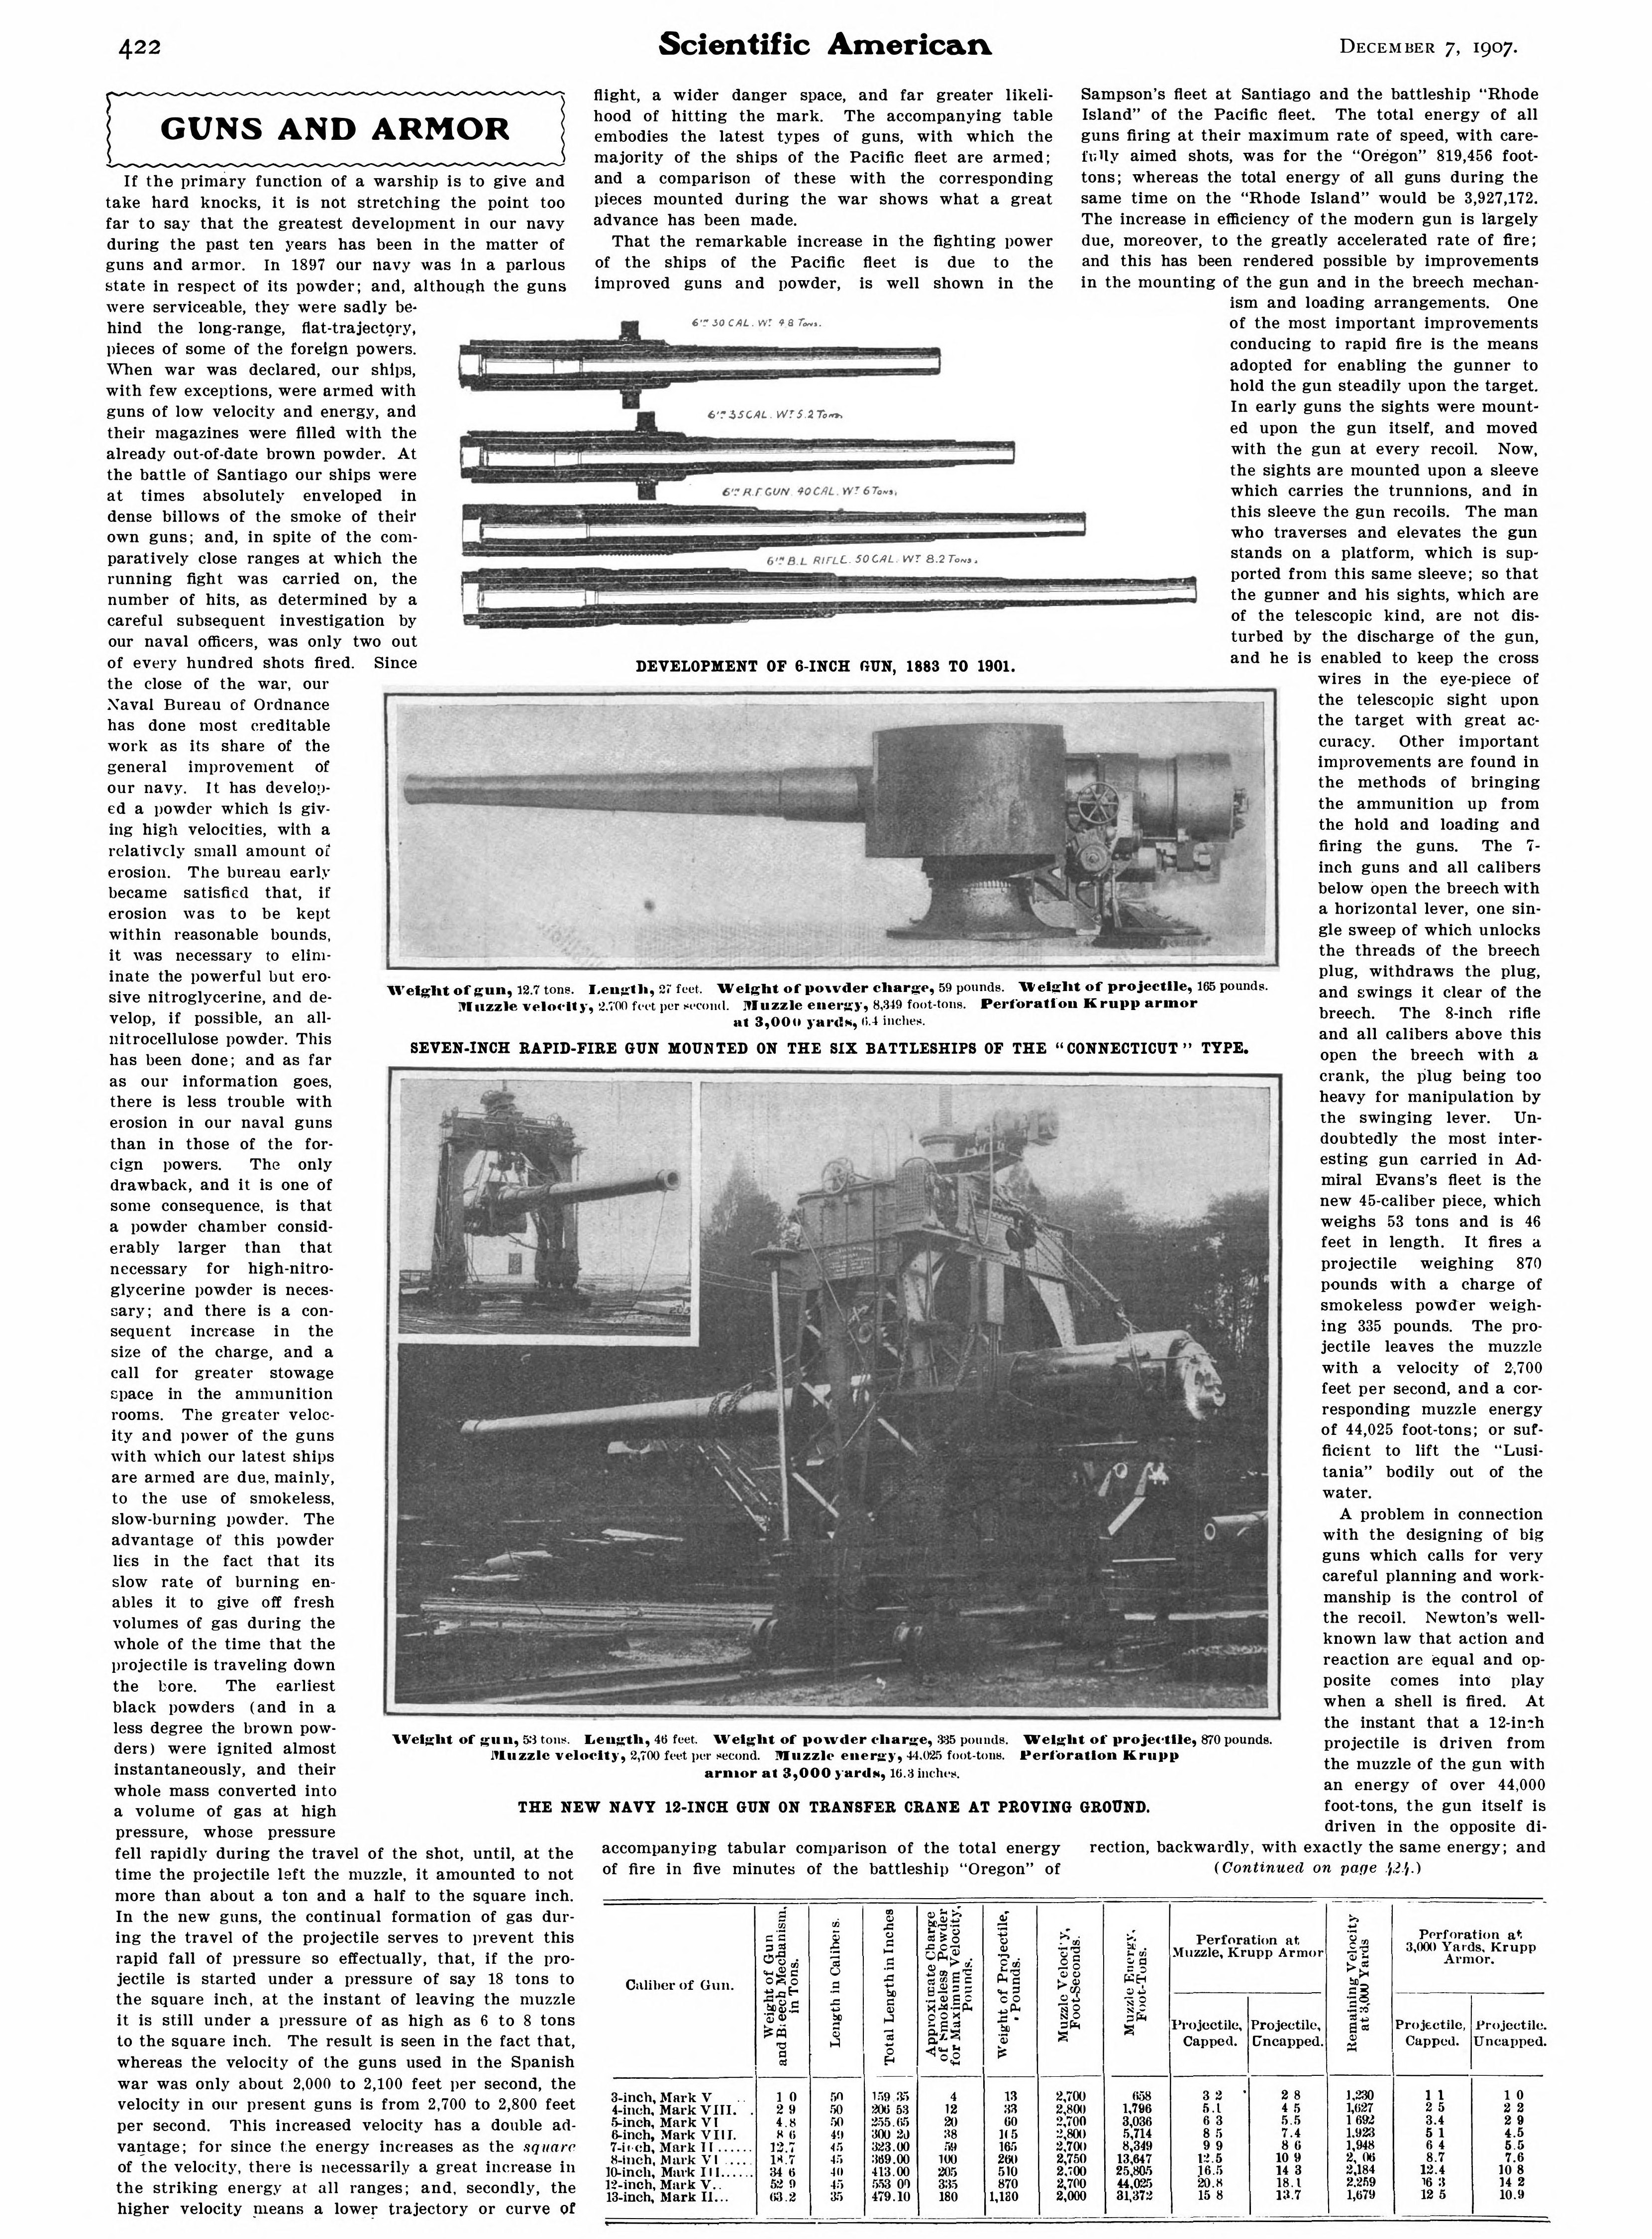 США - орудия scientific-american-v97-n23-1907-12-07_0020.jpg